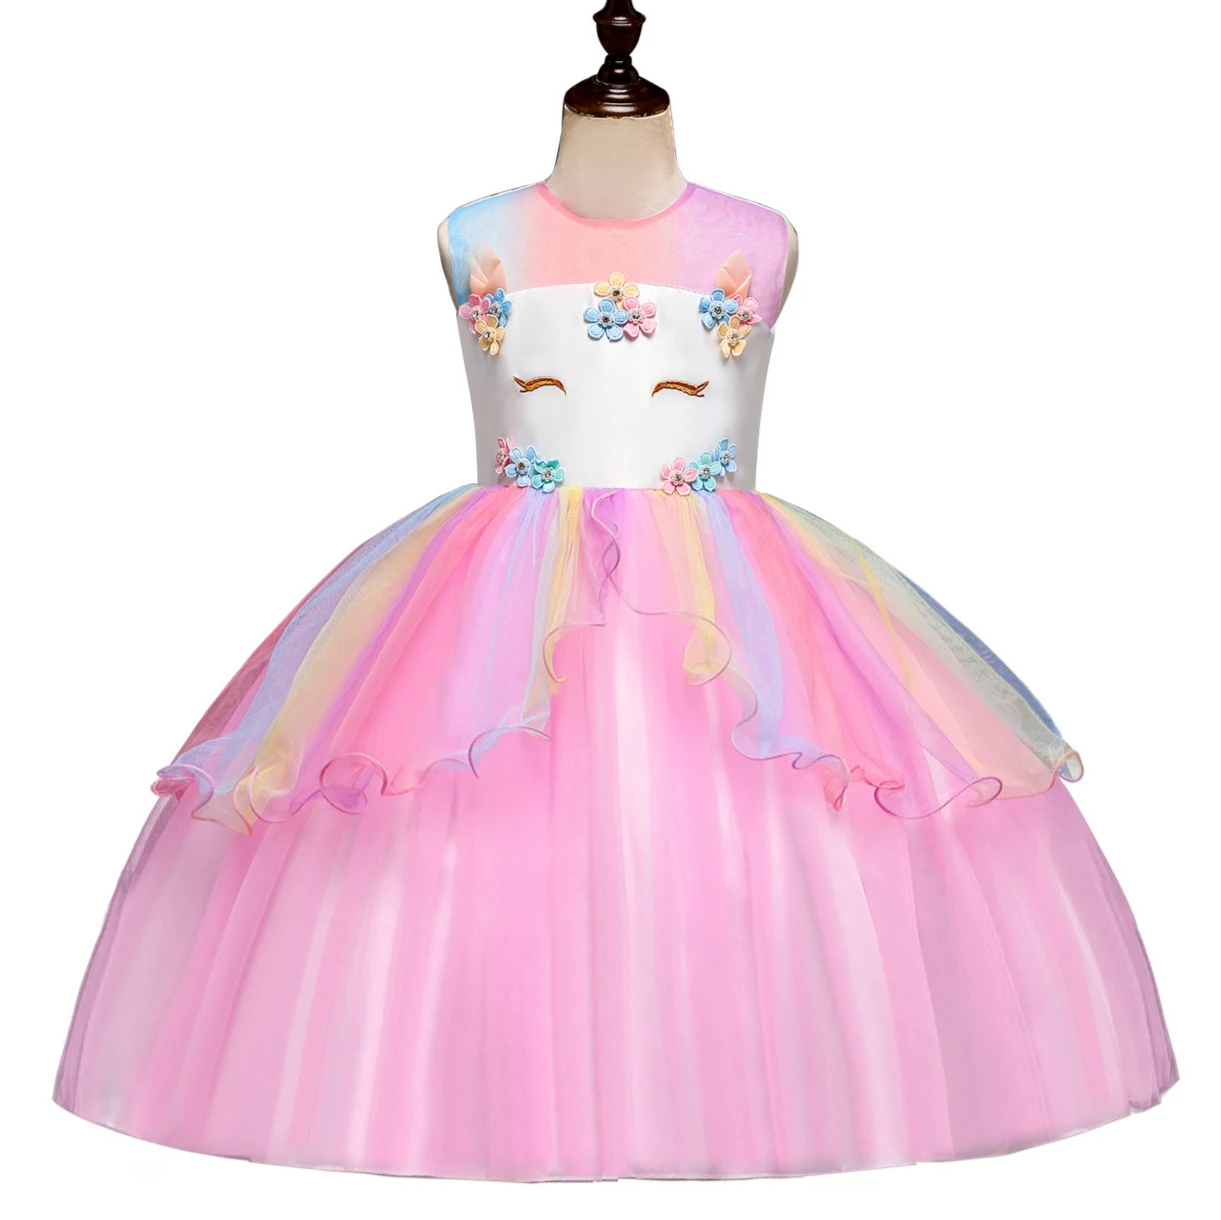 AmzBarley Girls Costume Princess Sofia Dress Fancy Party Dress up Cosplay